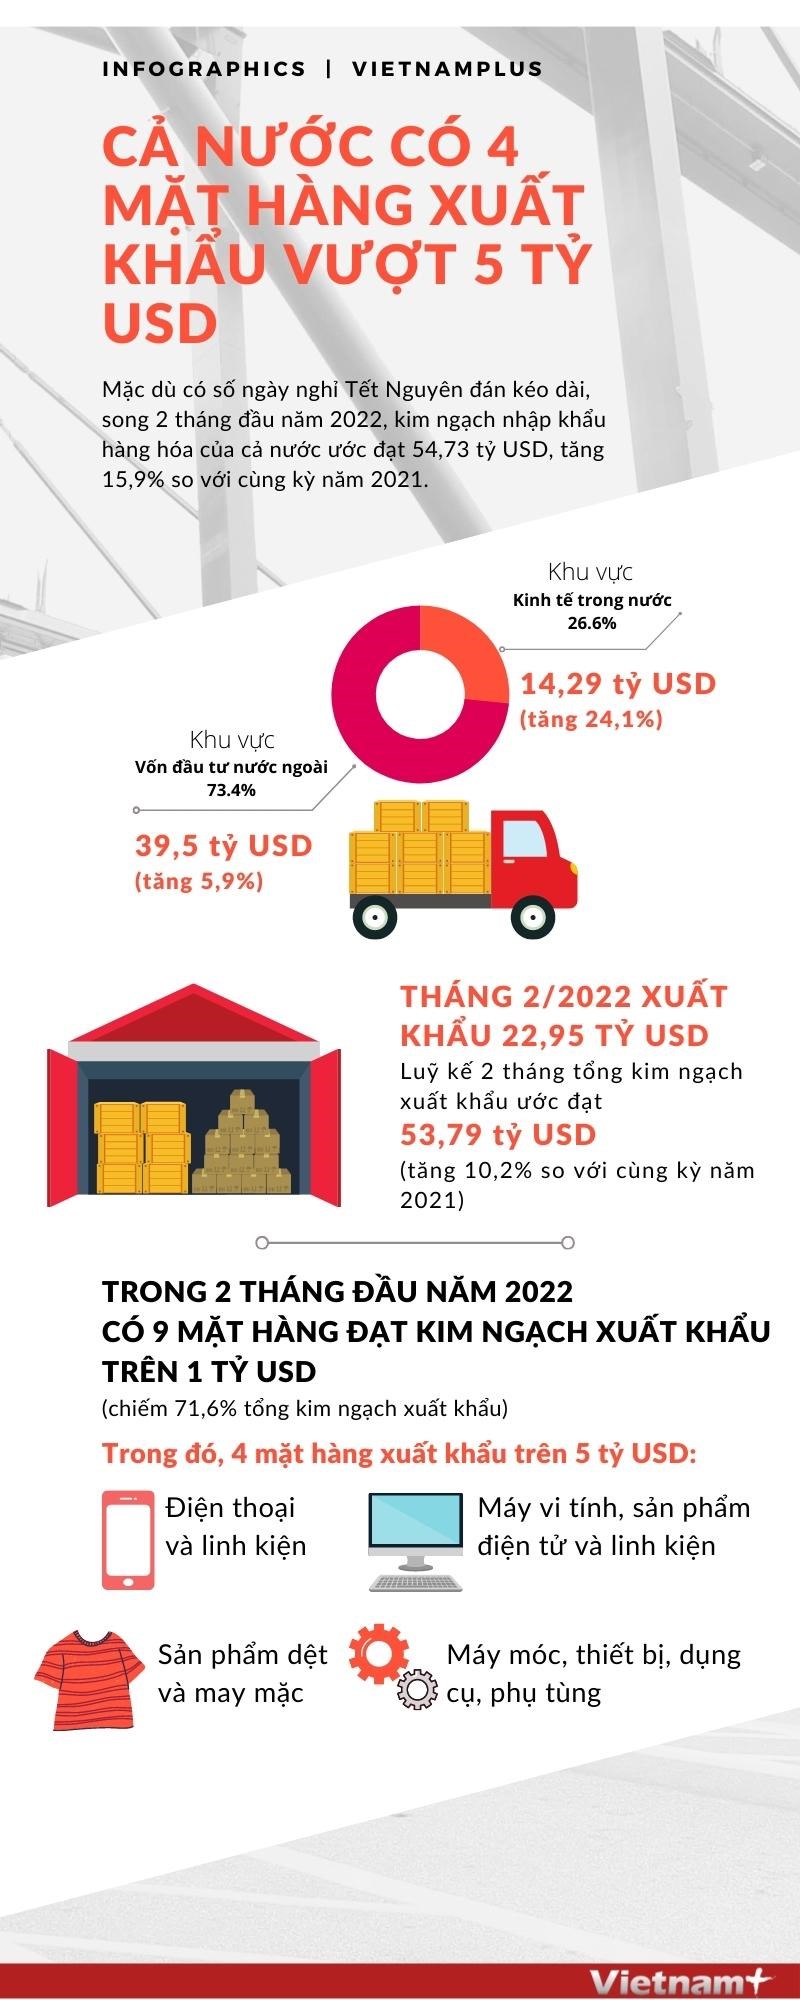 [Infographics] Ca nuoc co 4 mat hang xuat khau vuot 5 ty USD hinh anh 1